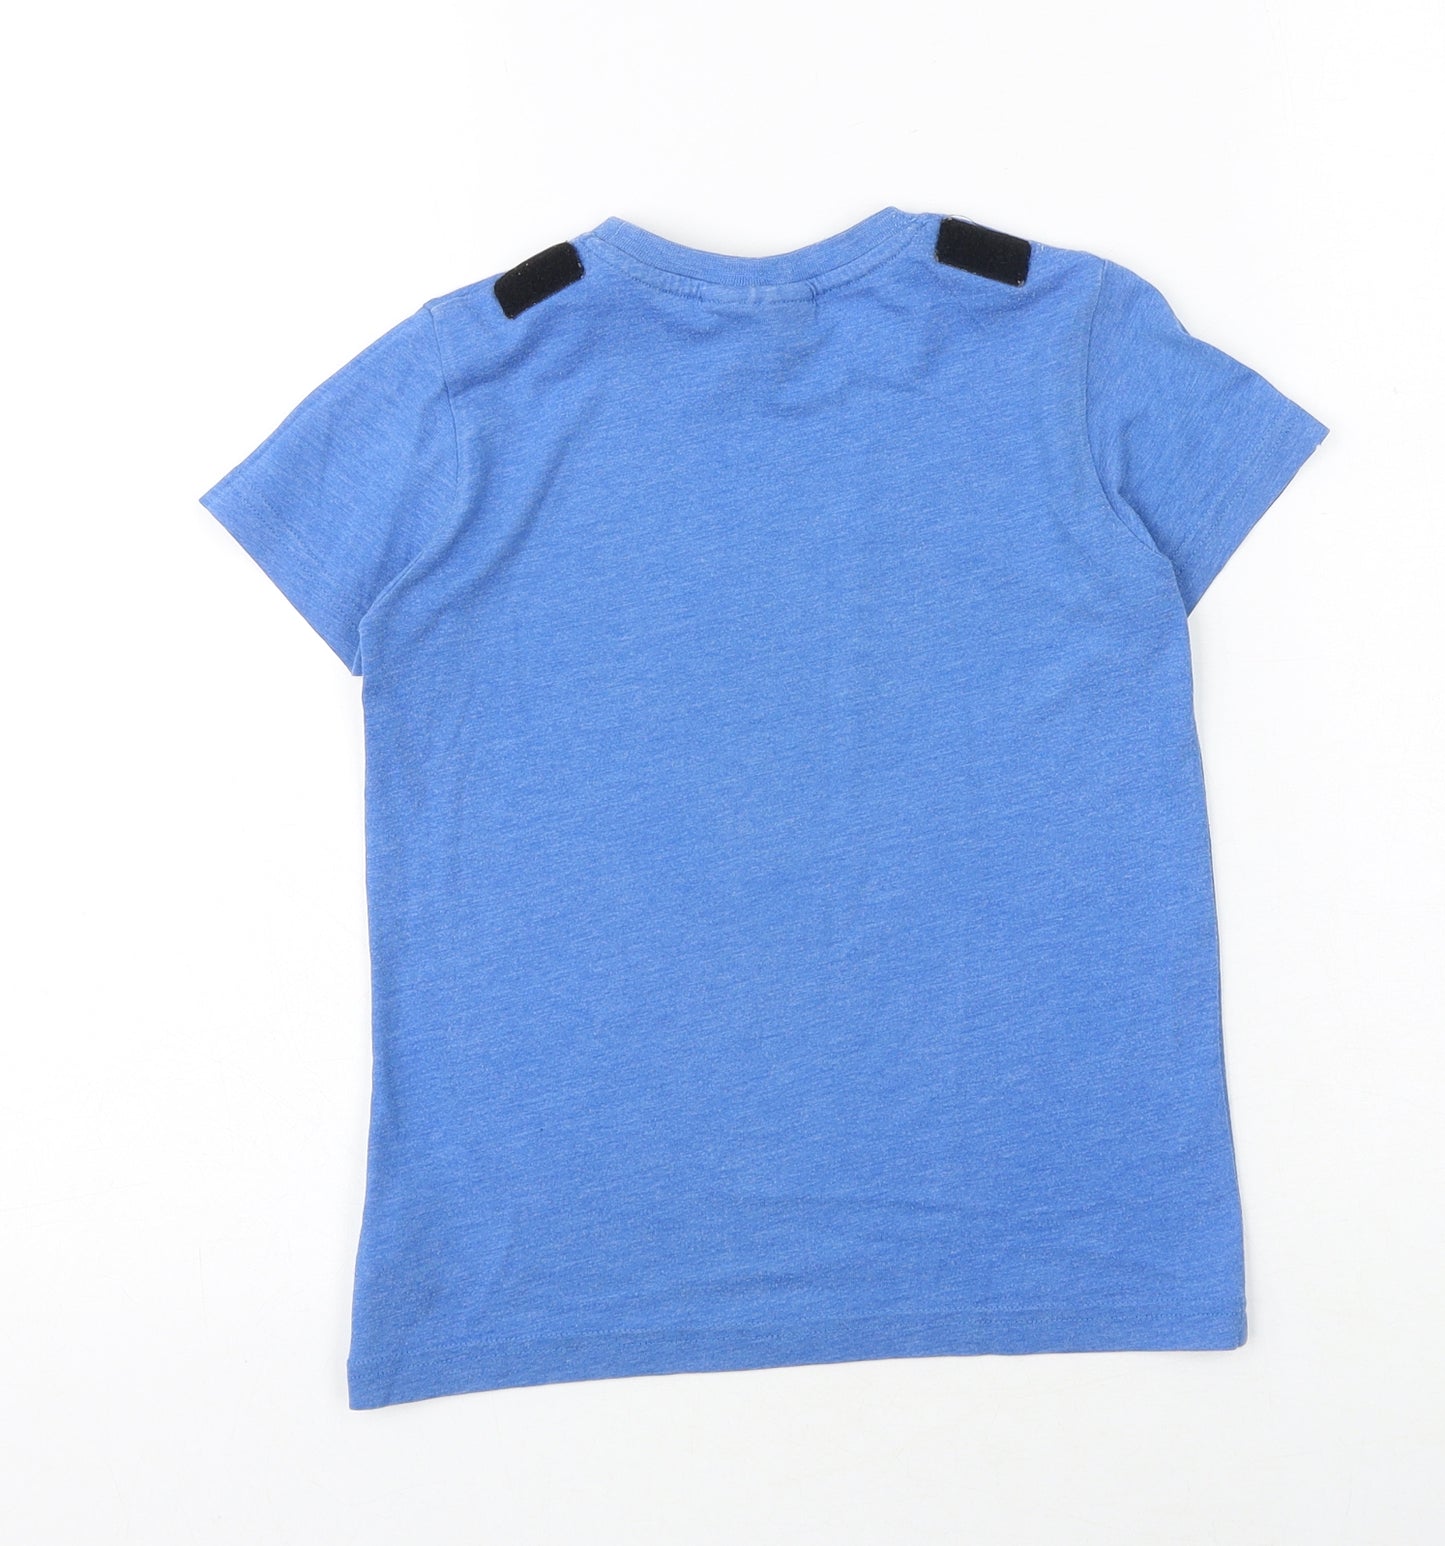 NEXT Boys Blue Cotton Basic T-Shirt Size 4-5 Years Round Neck Pullover - Superman